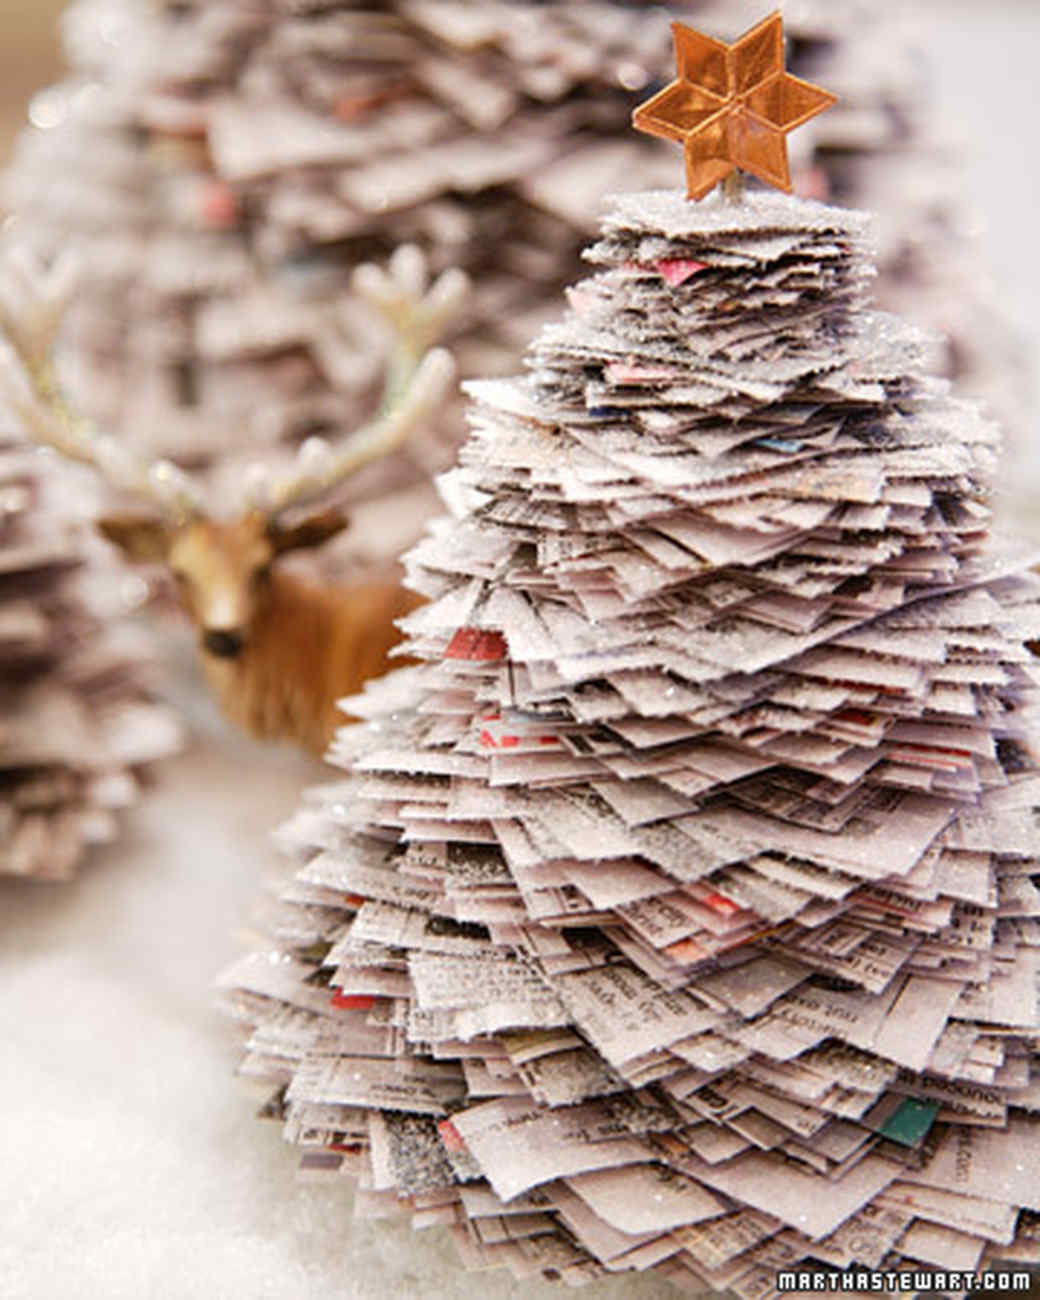 DIY Christmas Trees Ideas